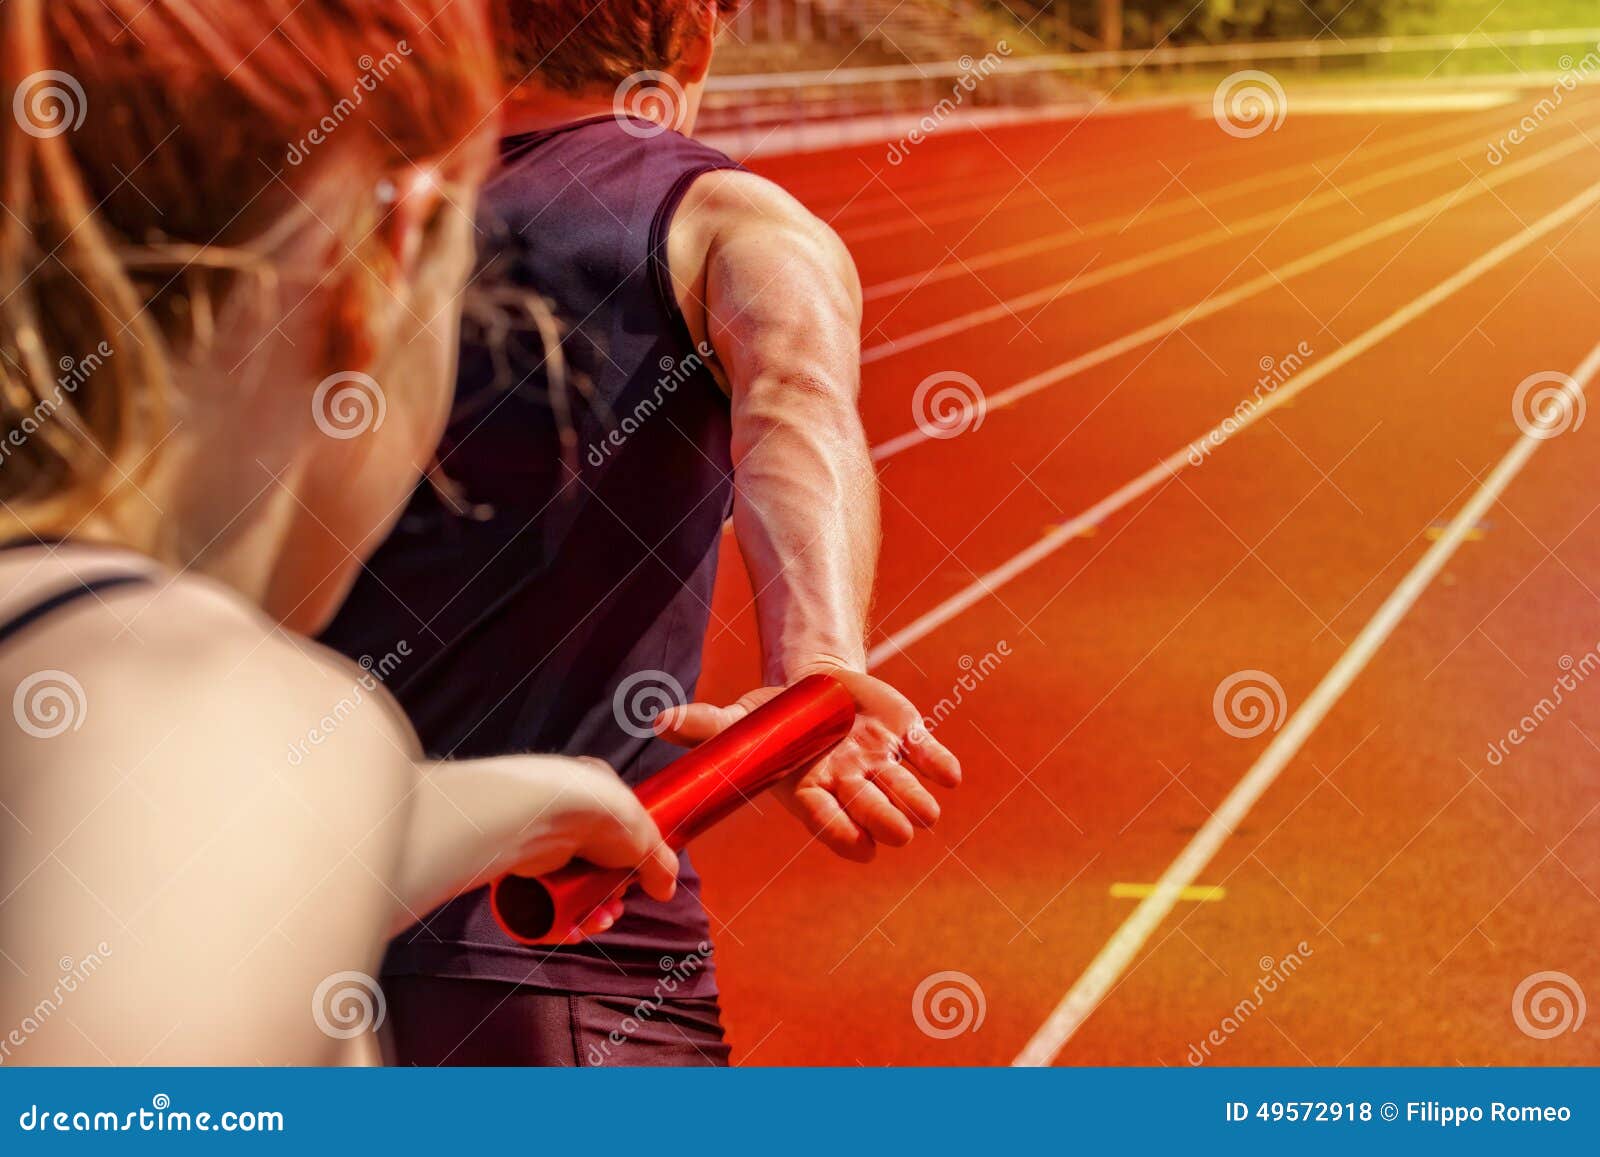 relay race handing over female male